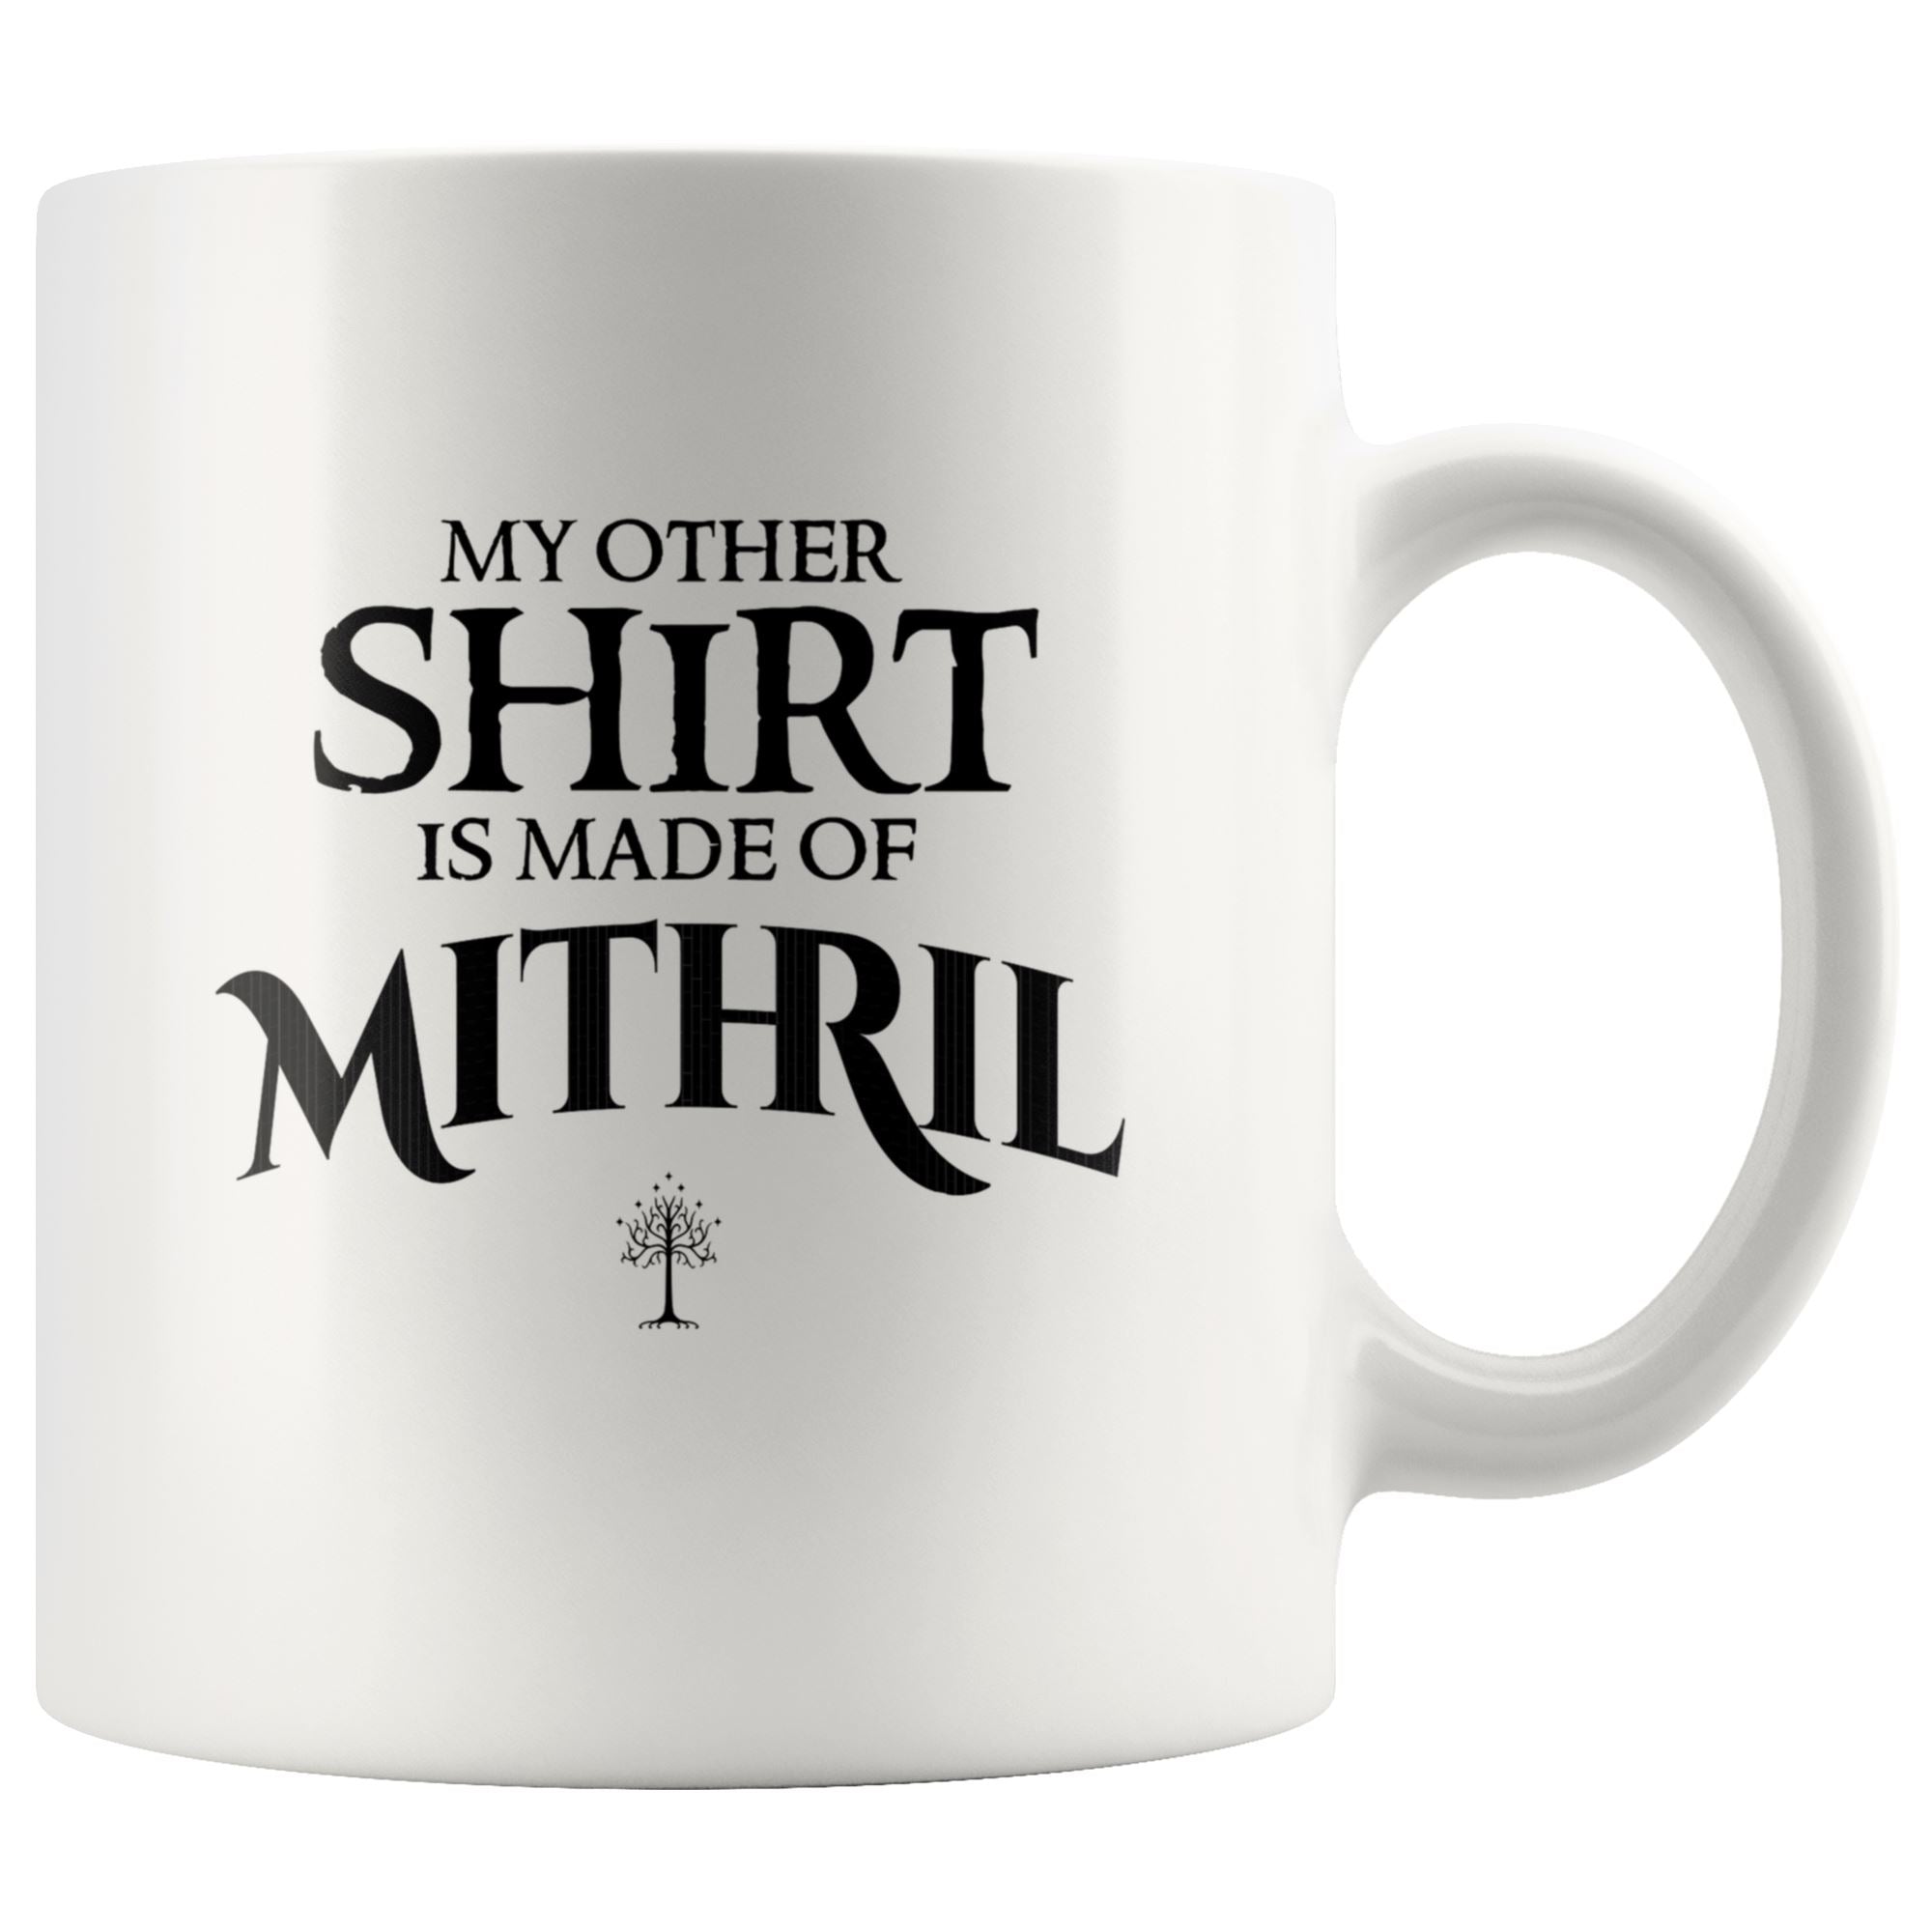 Mithril Mug Drinkware teelaunch 11oz Mug 